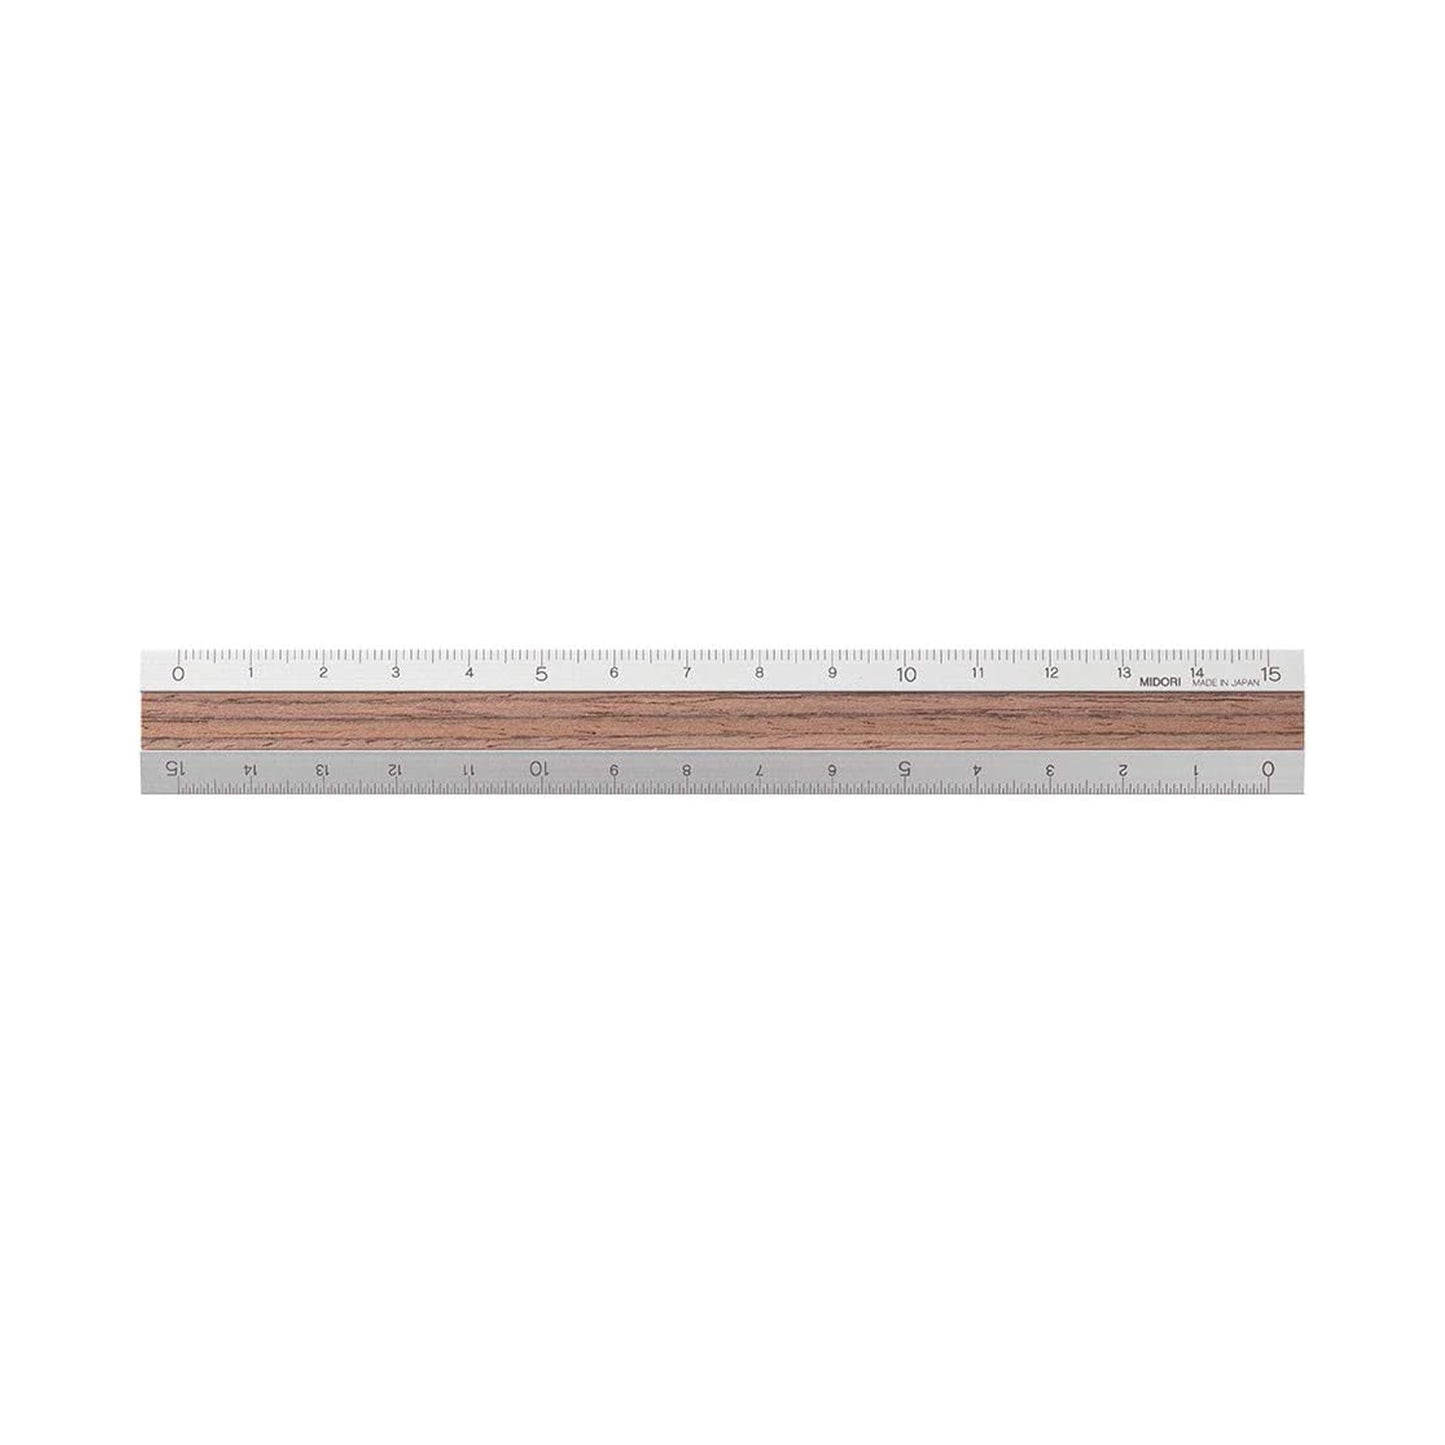 Aluminum & Wood Ruler 15cm Dark Brown / Midori